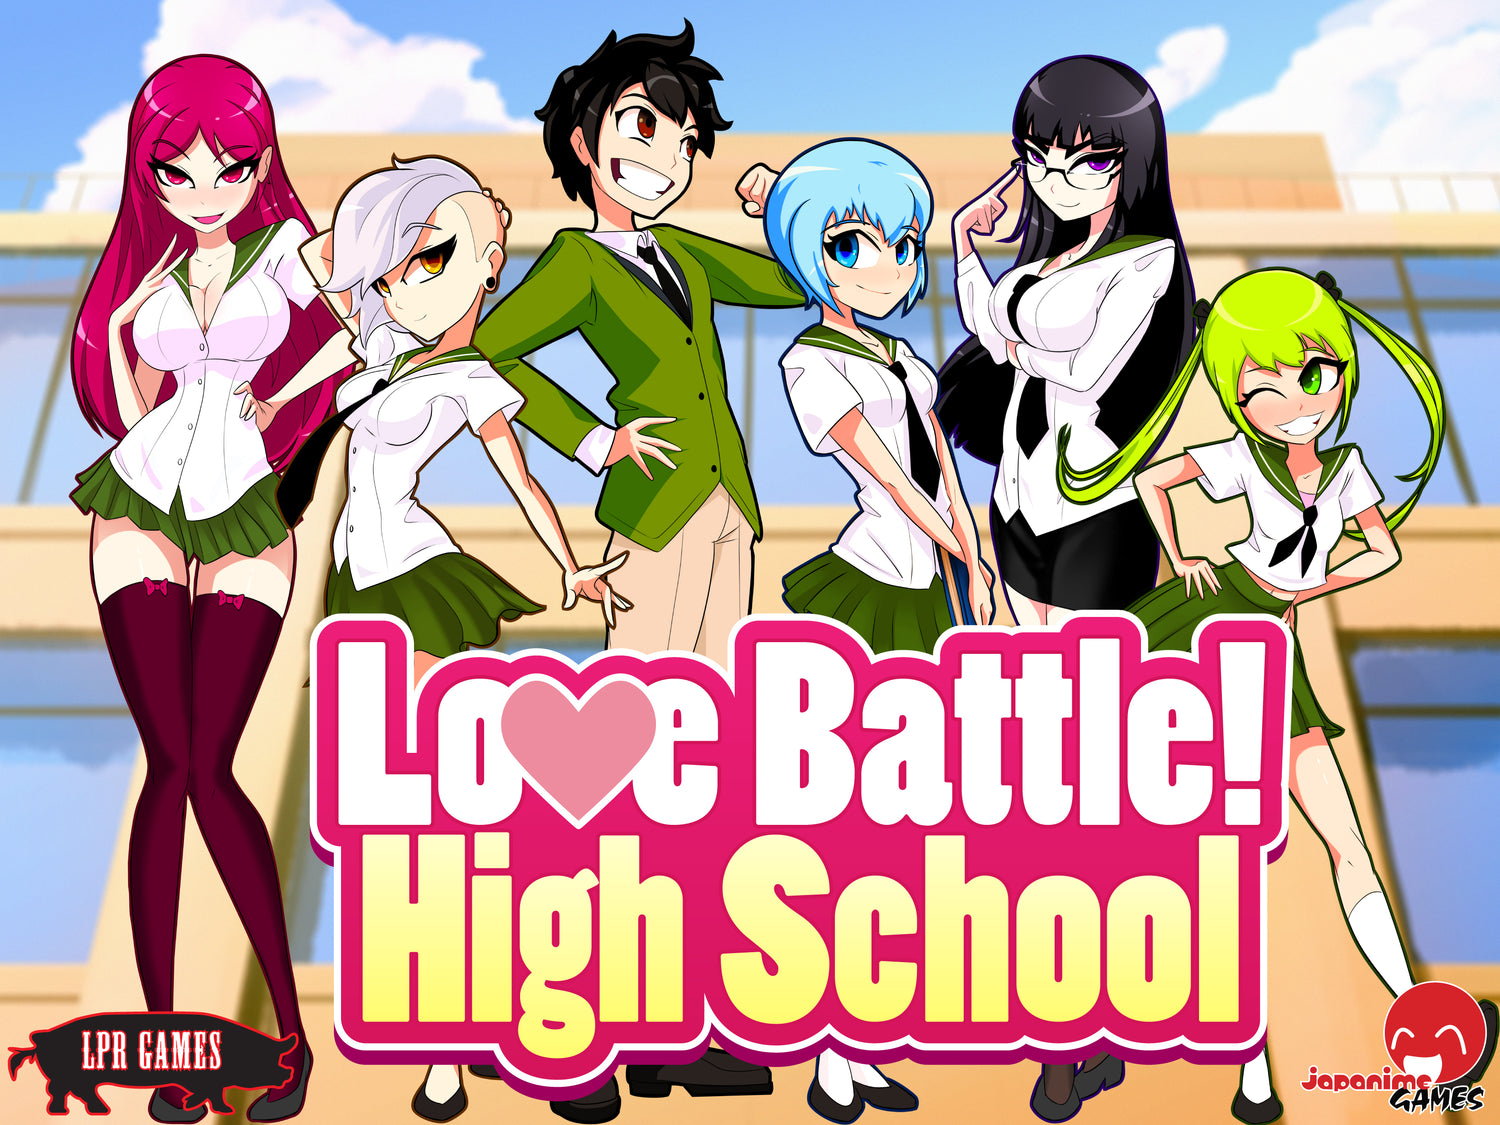 Love Battle! High School